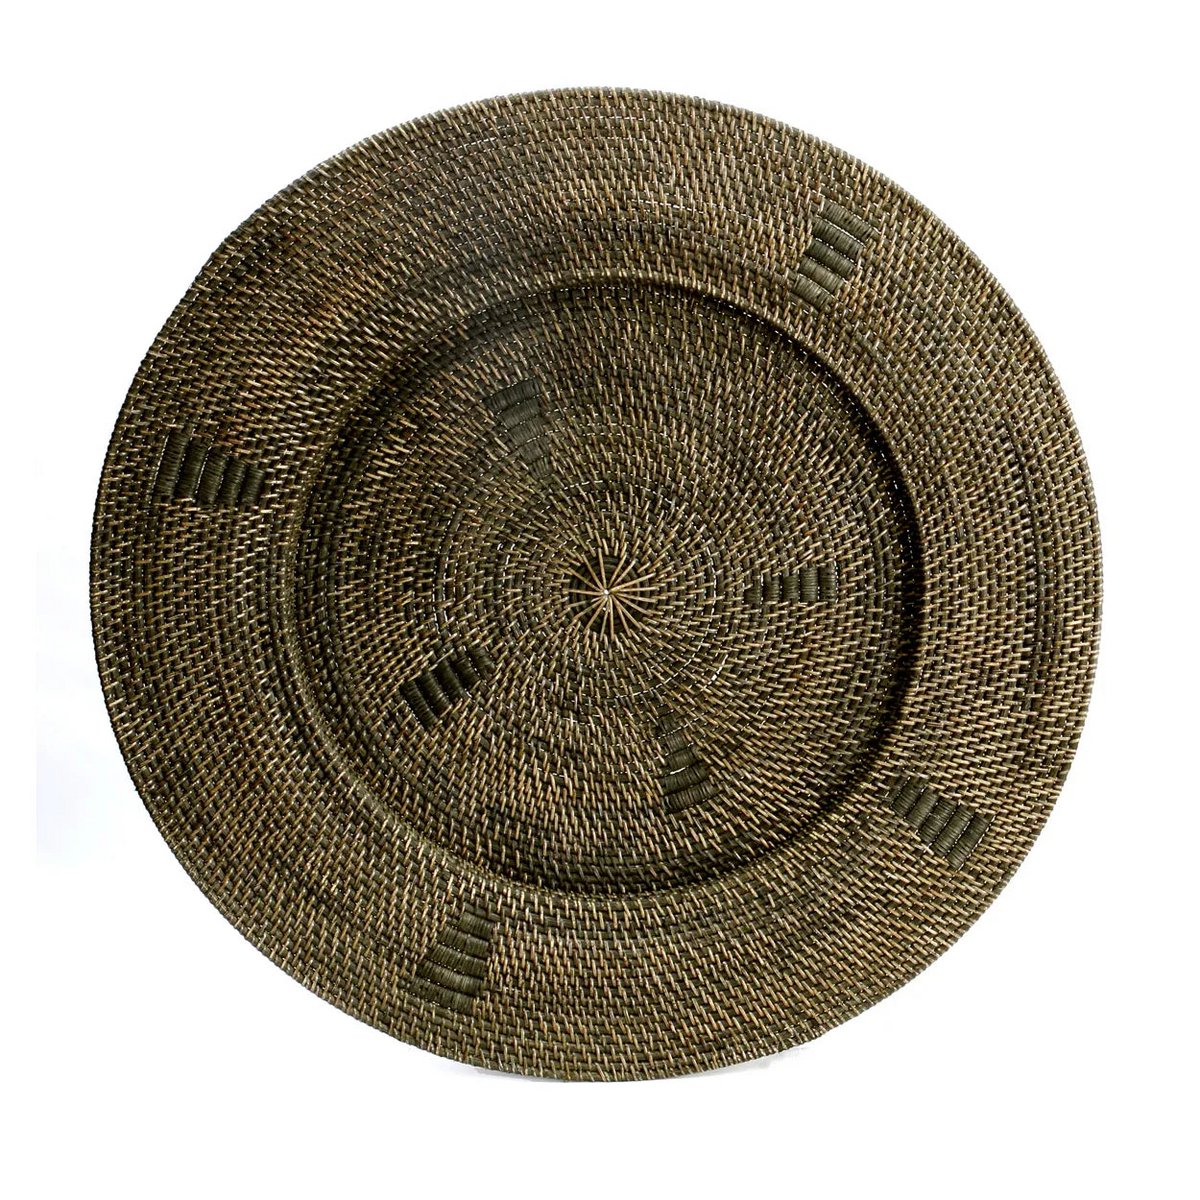 Wandteller - The Jasmine Plate XL - Rattan Deko, braun